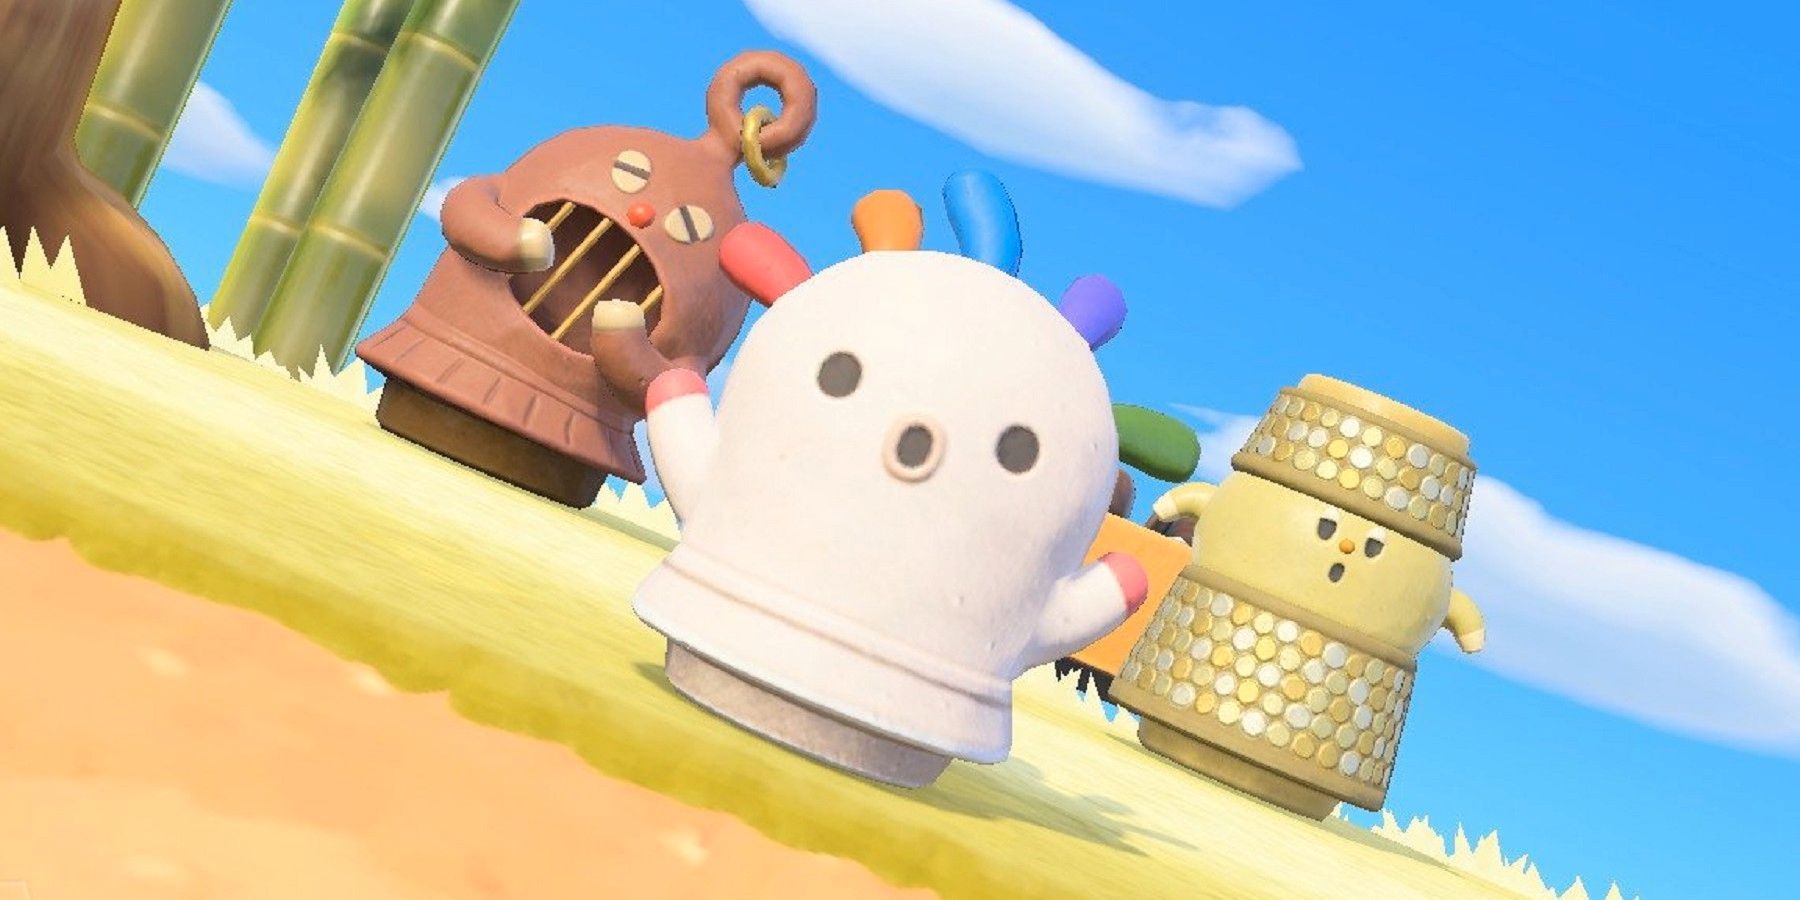 Фанат Animal Crossing создал настоящий гироид